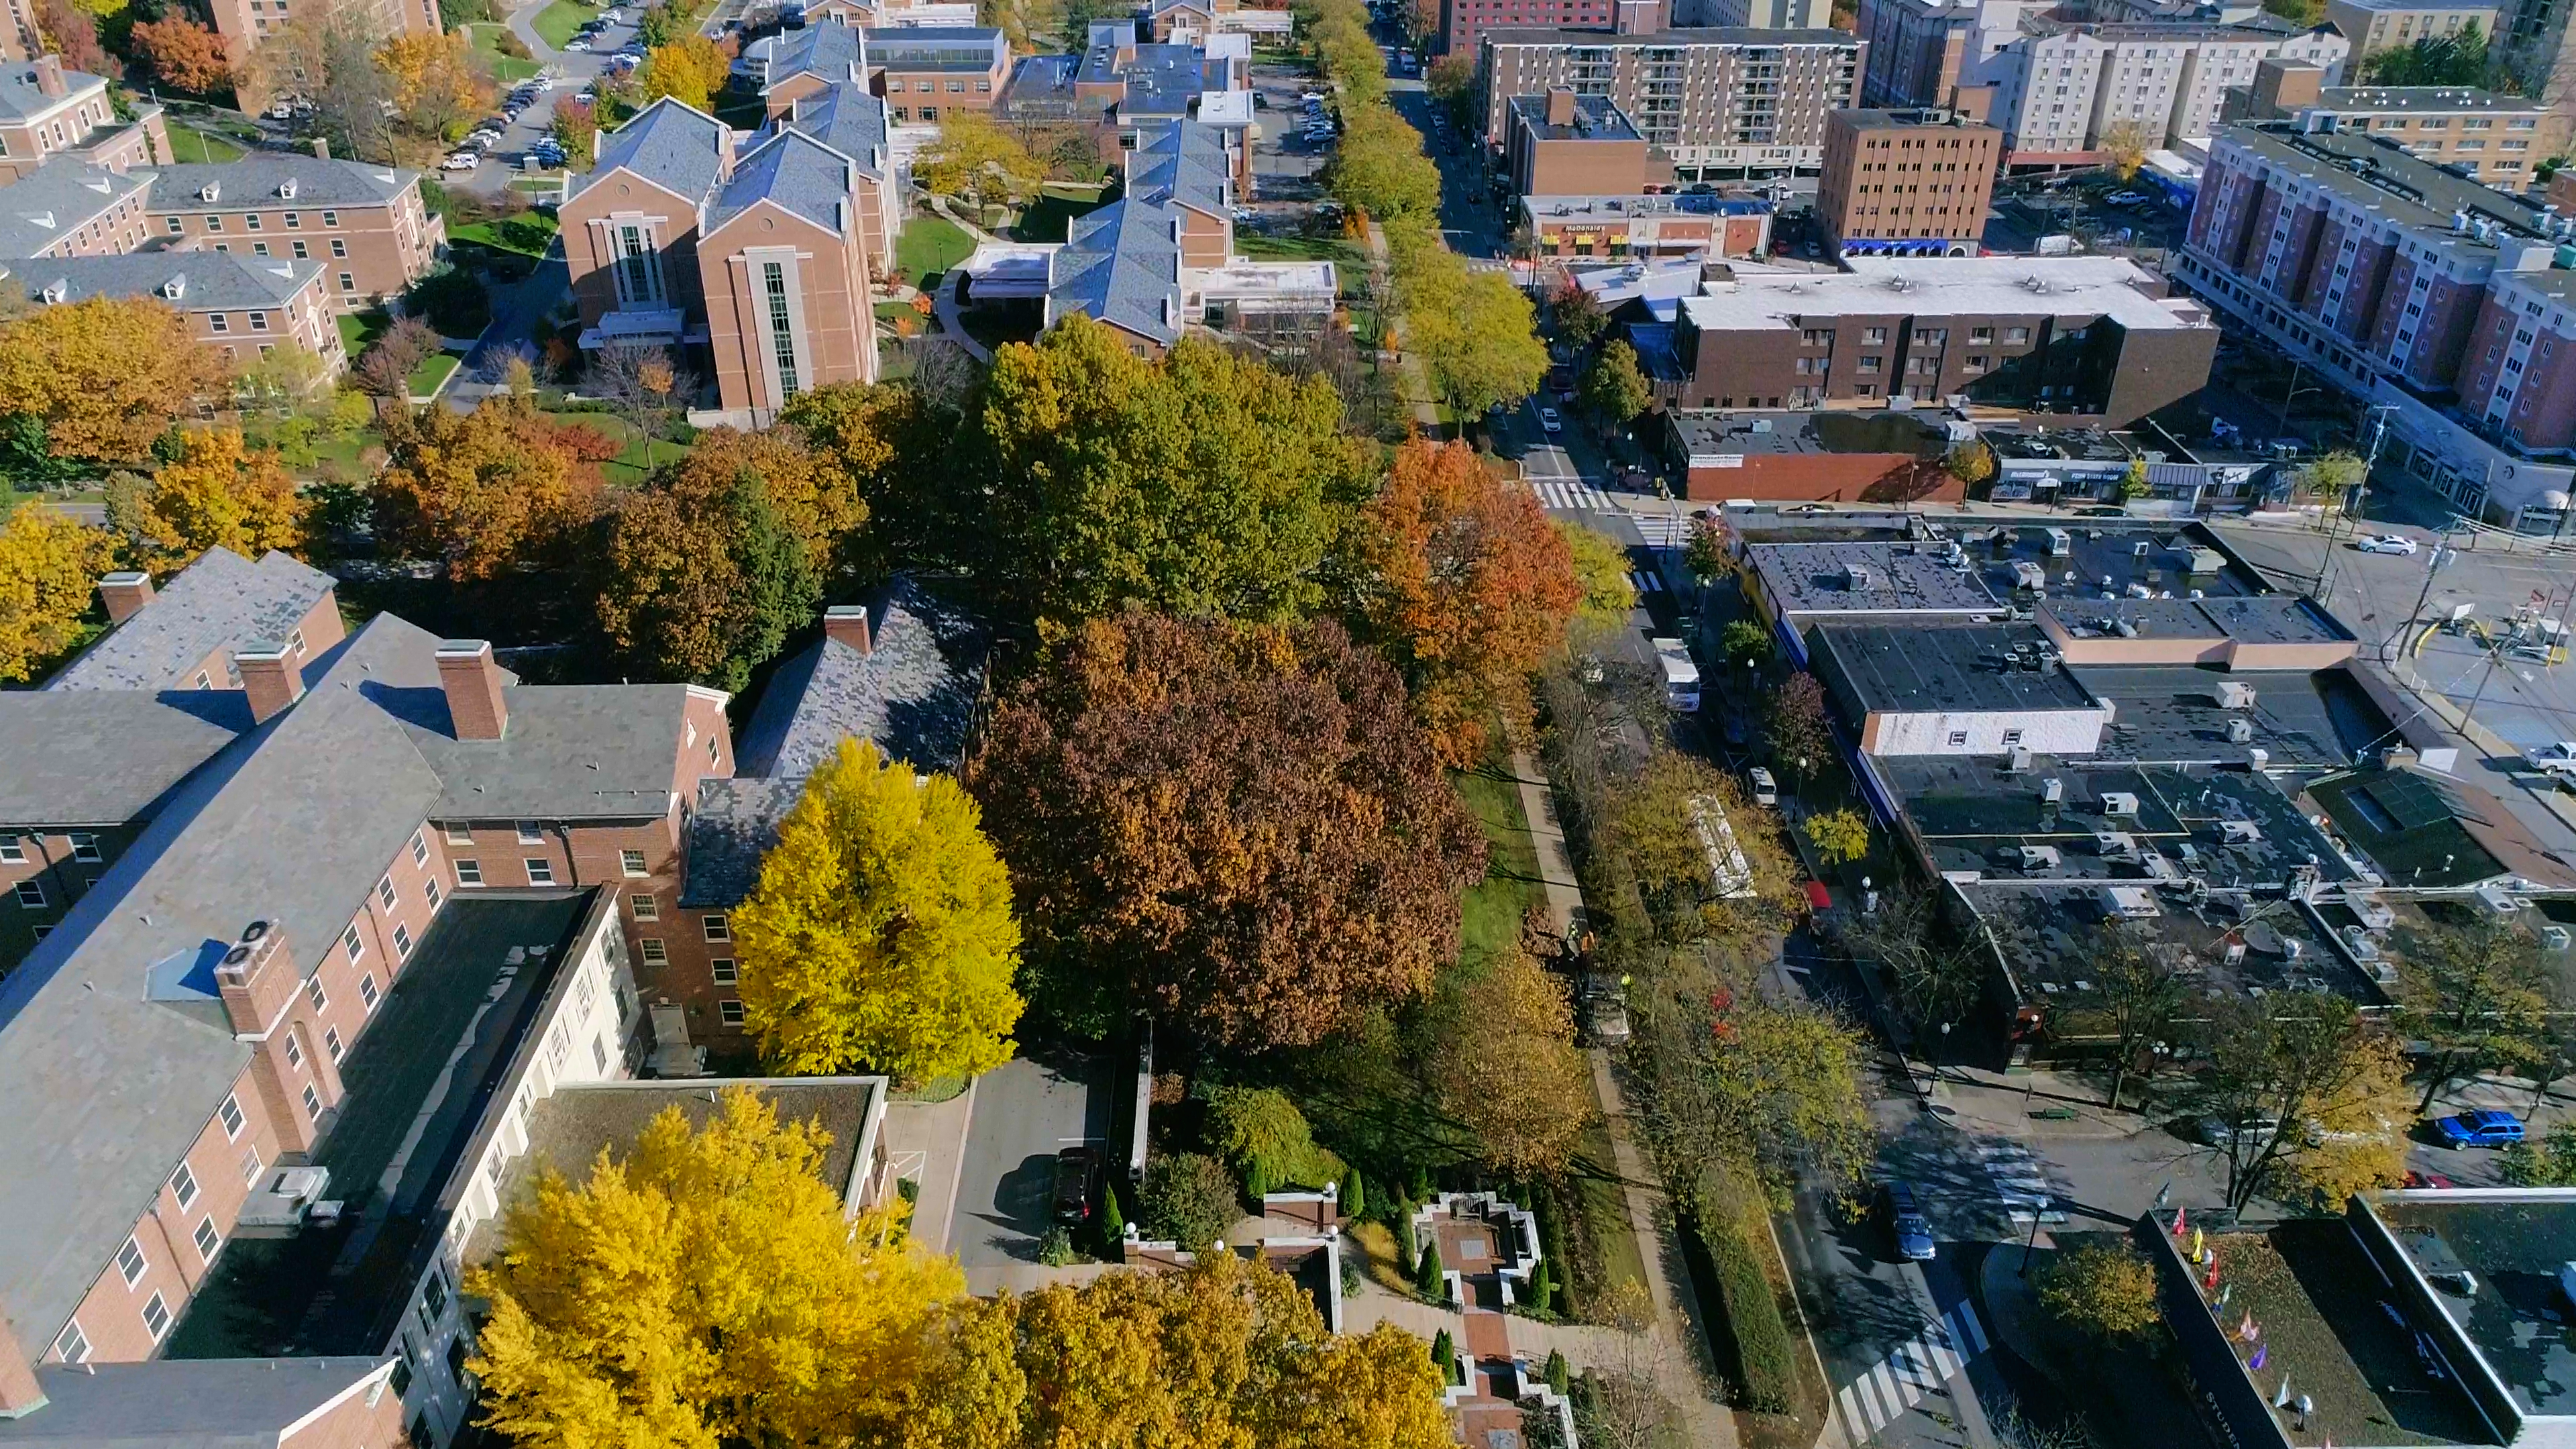 Drone Image of College Avenue